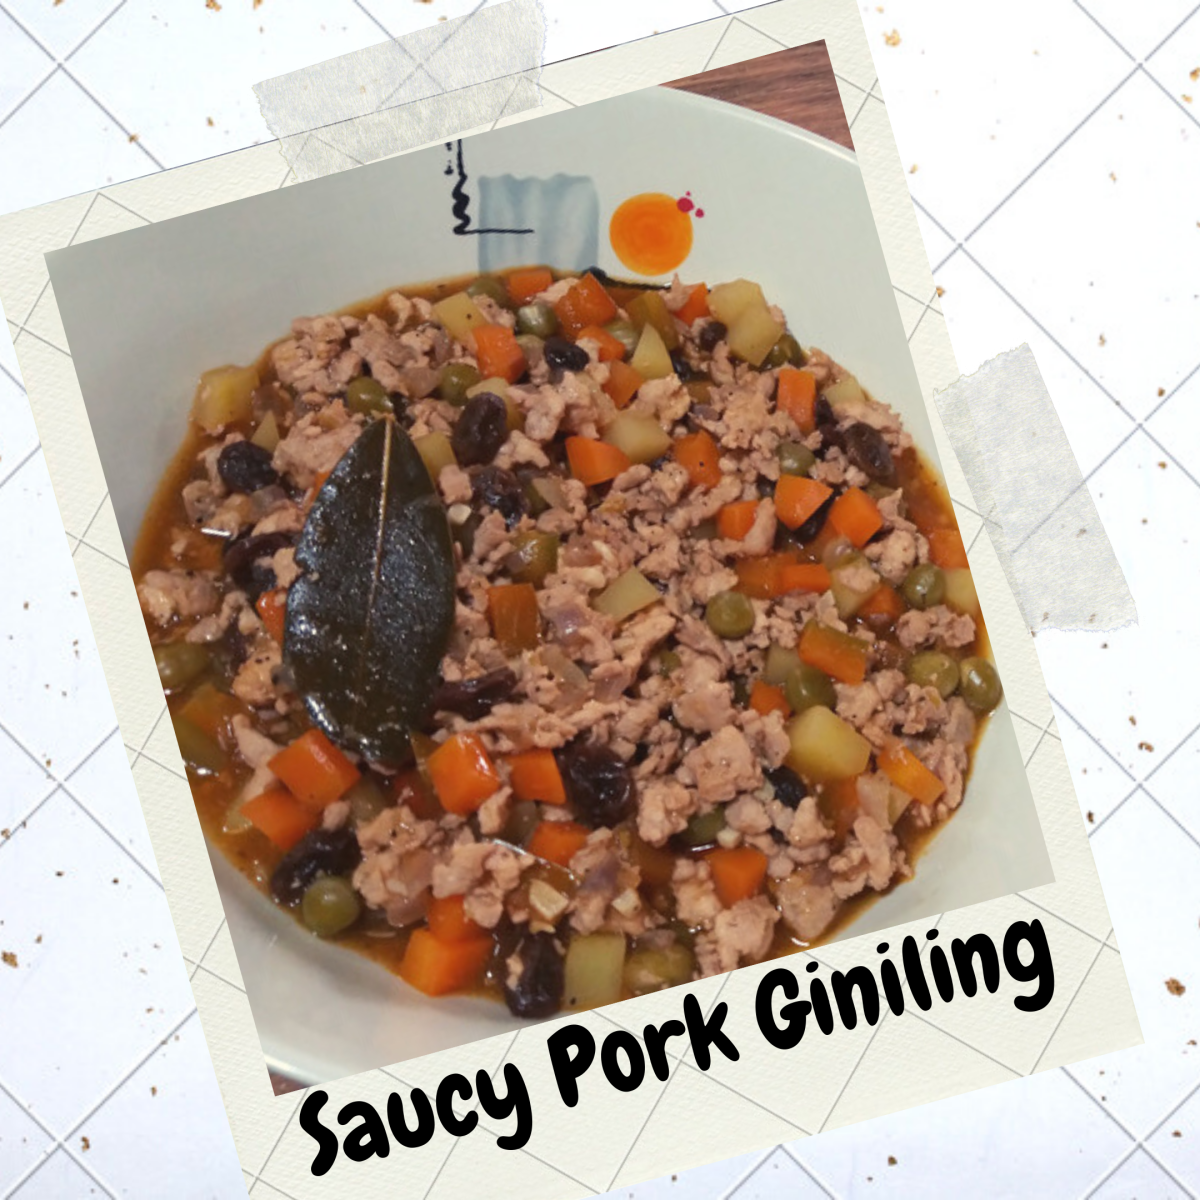 Saucy pork giniling is a popular Filipino dish